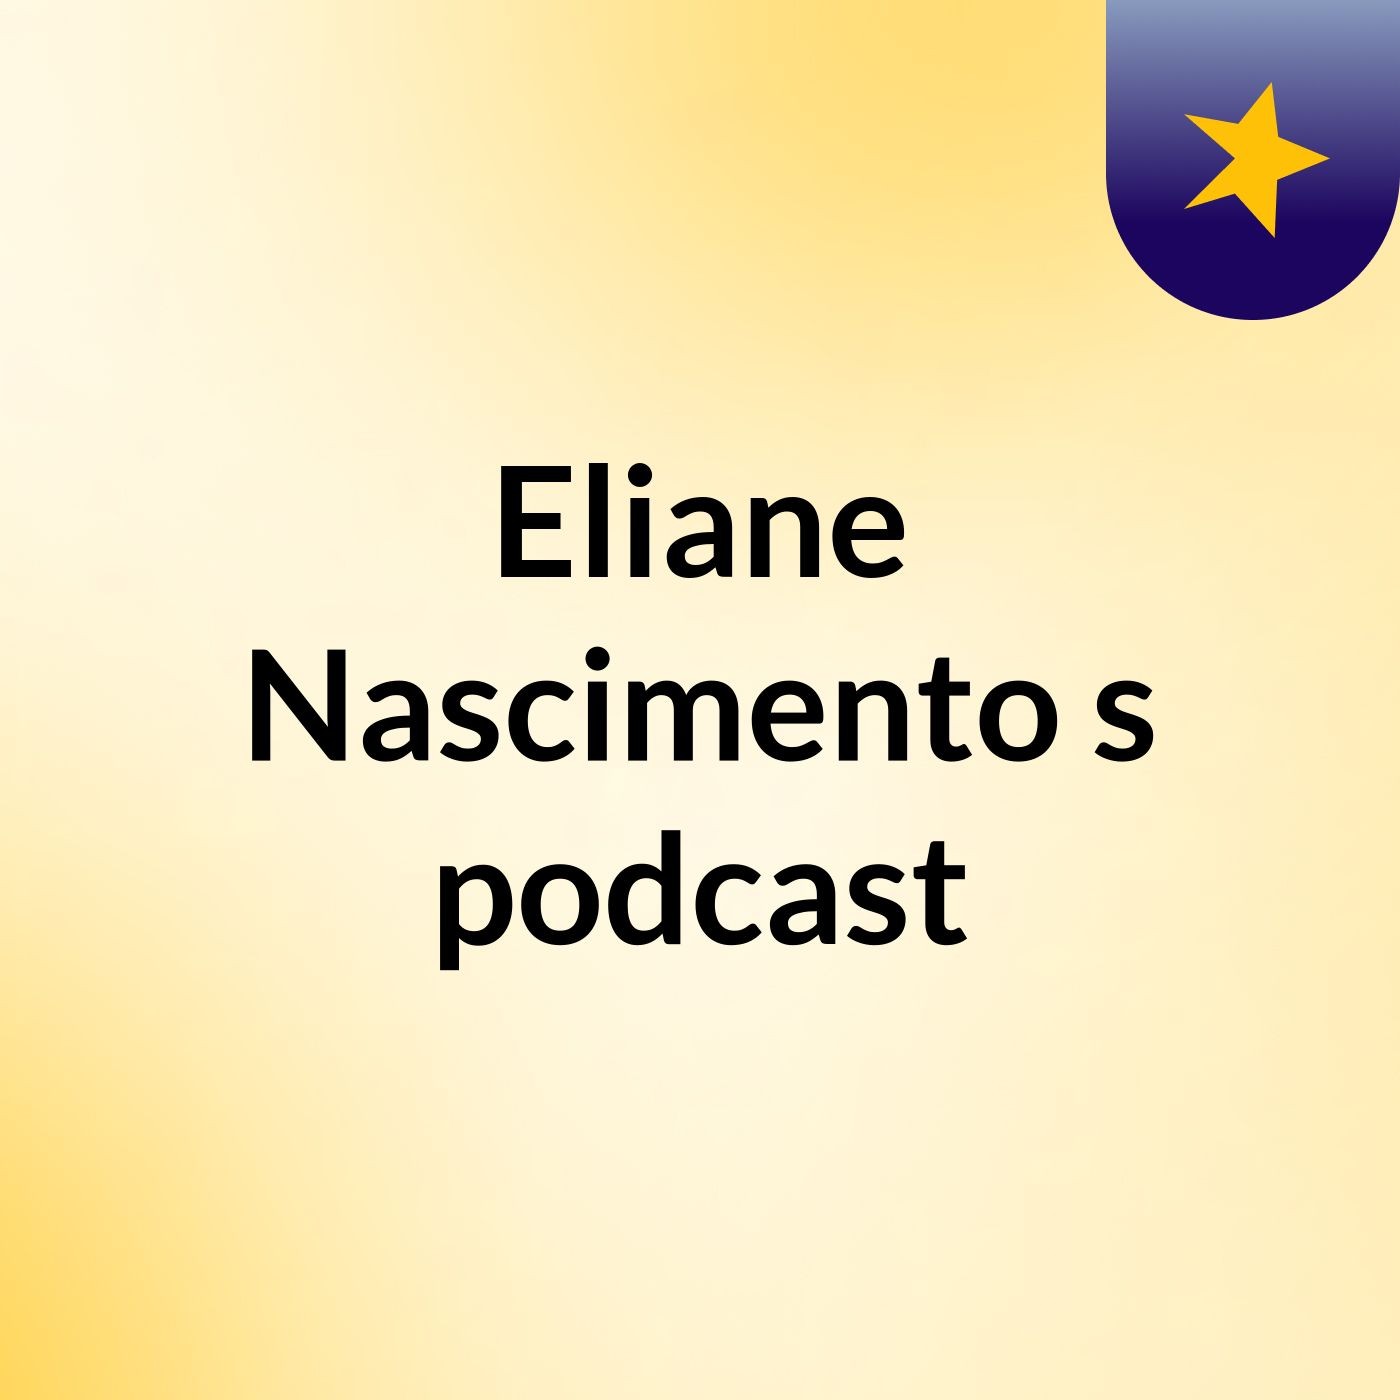 Eliane Nascimento's podcast